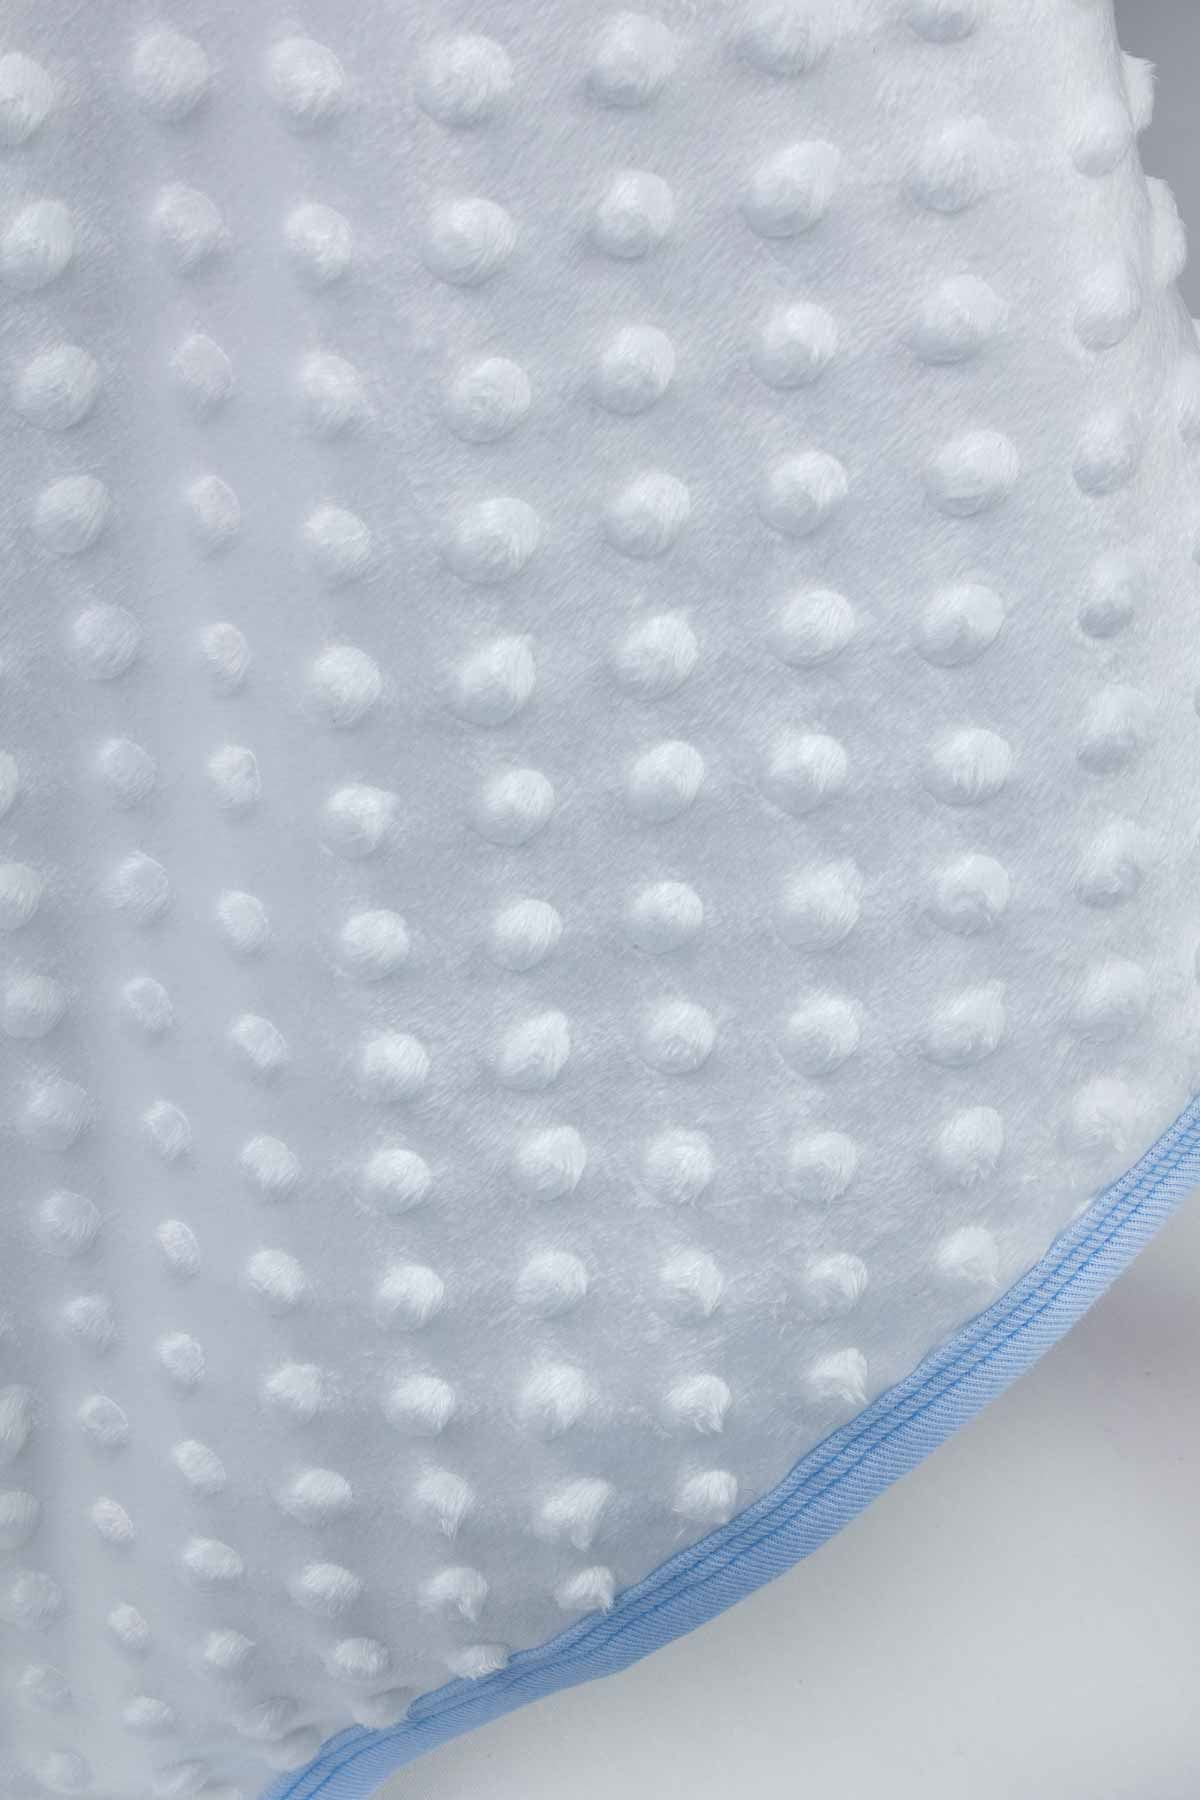 White 85 X90 cm Boy Babies Blanket King Queen Boys Baby Newborn Crown CottonEmbossed Ultra Soft Antibacterial Infants Models